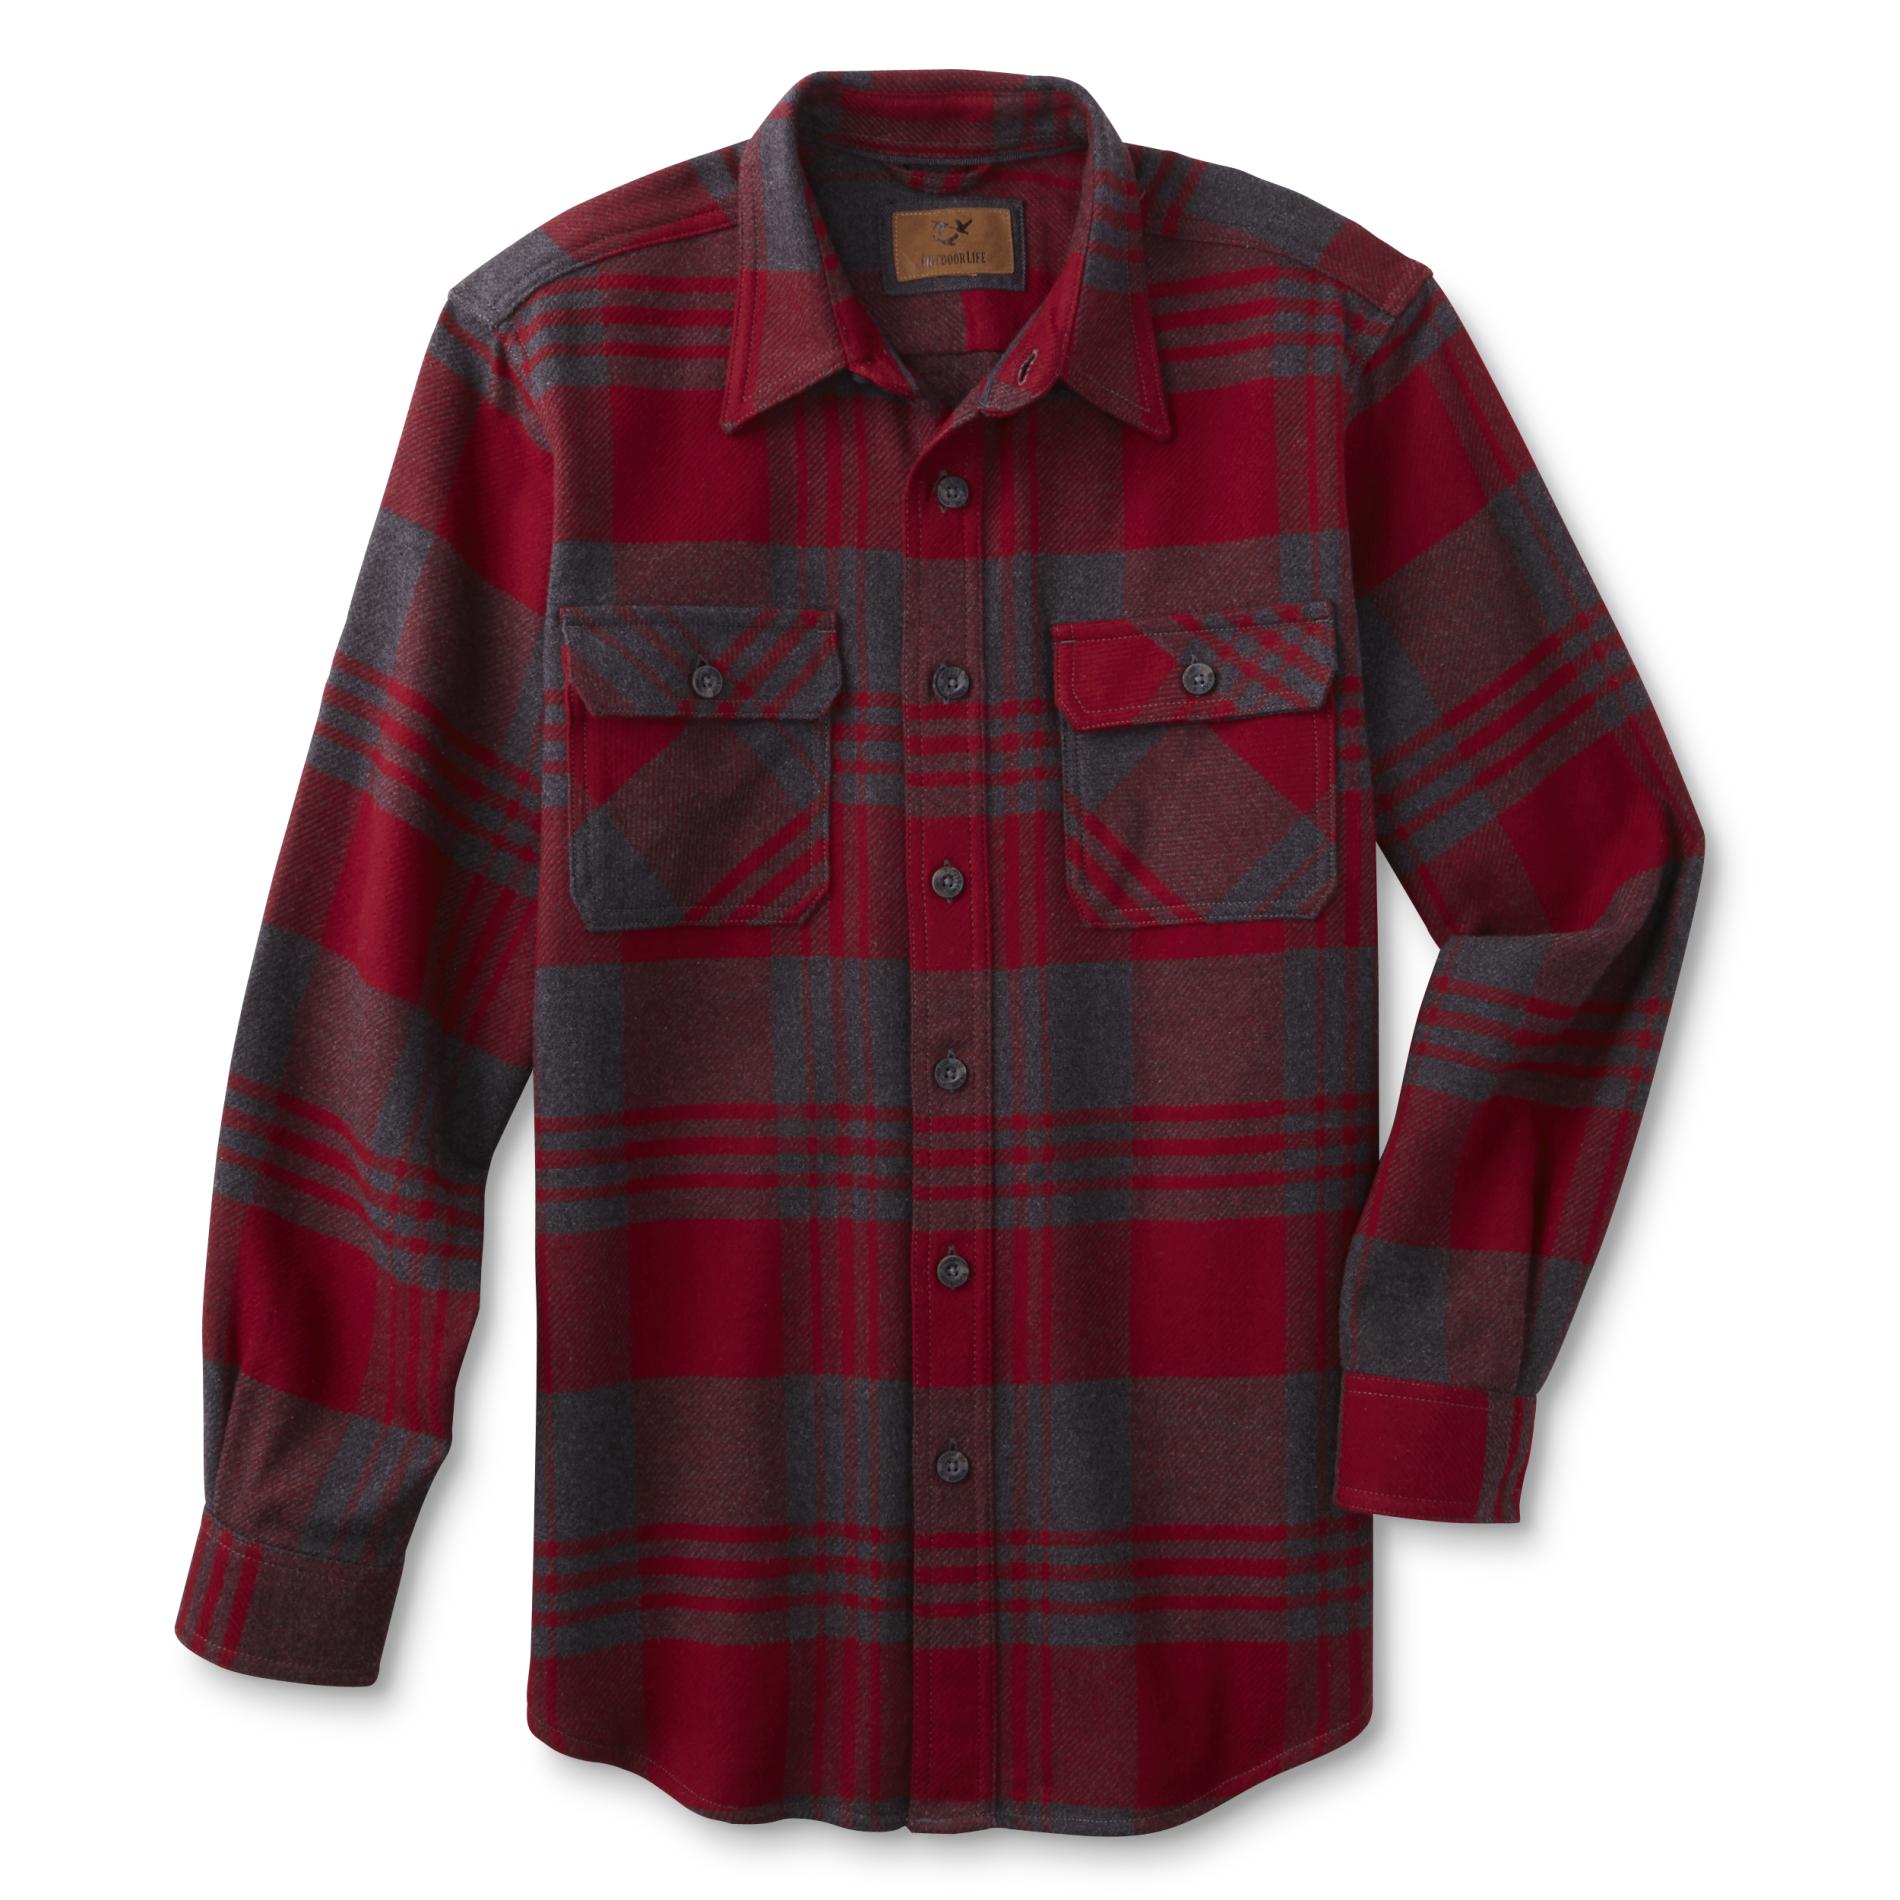 Outdoor Life Men's Shirt Jacket - Plaid | Shop Your Way: Online ...